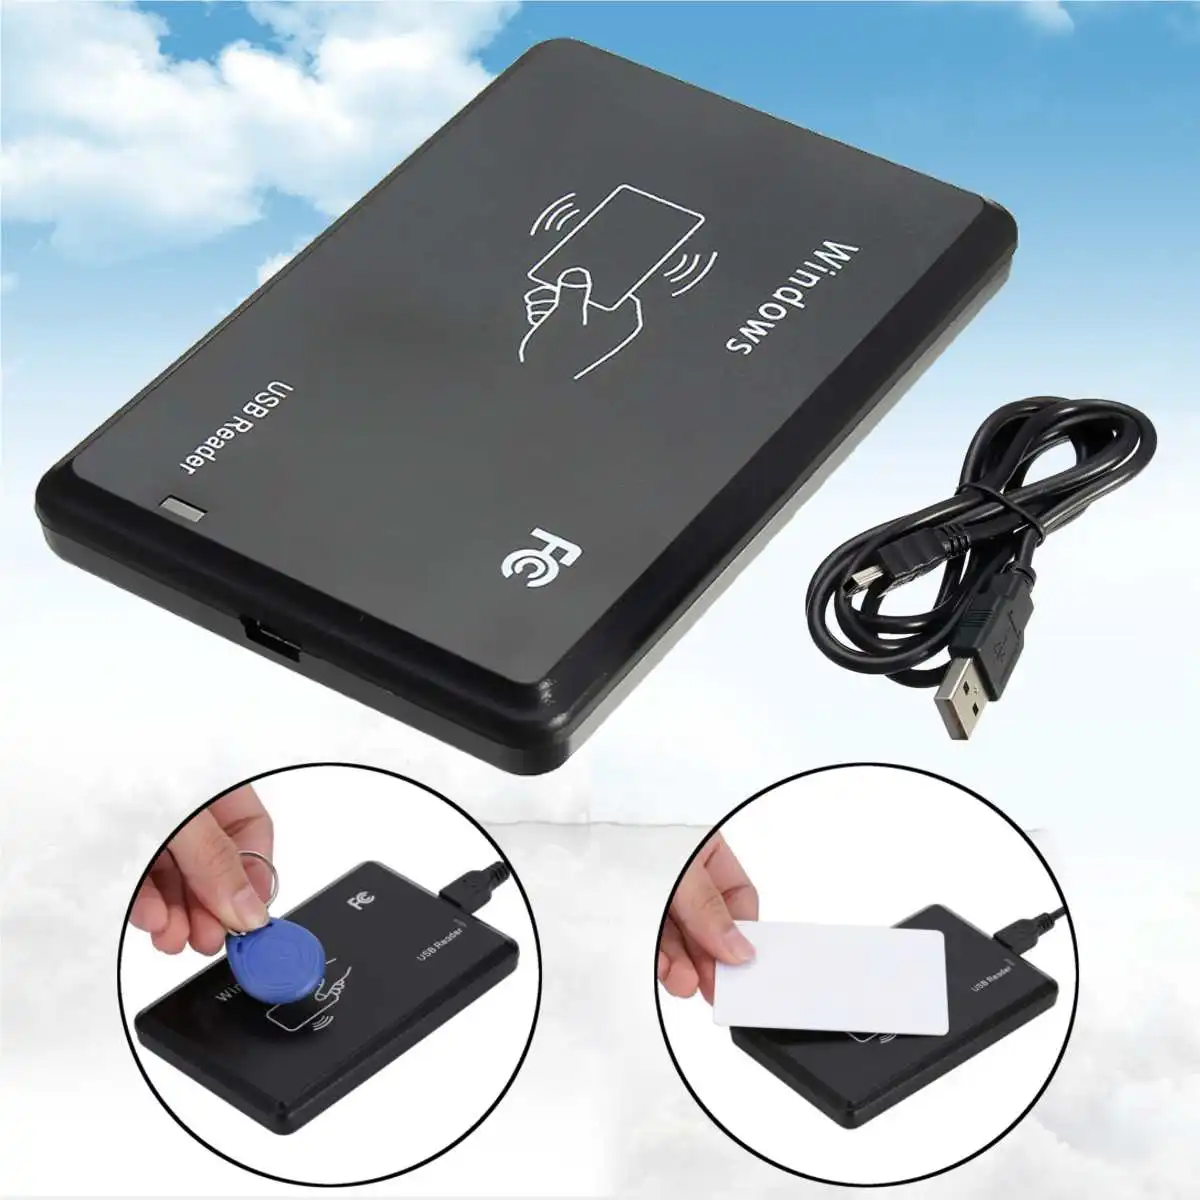 13.56Mhz RFID Reader 14443A Proximity Smart IC Card USB Sensor Free Driver Neu 